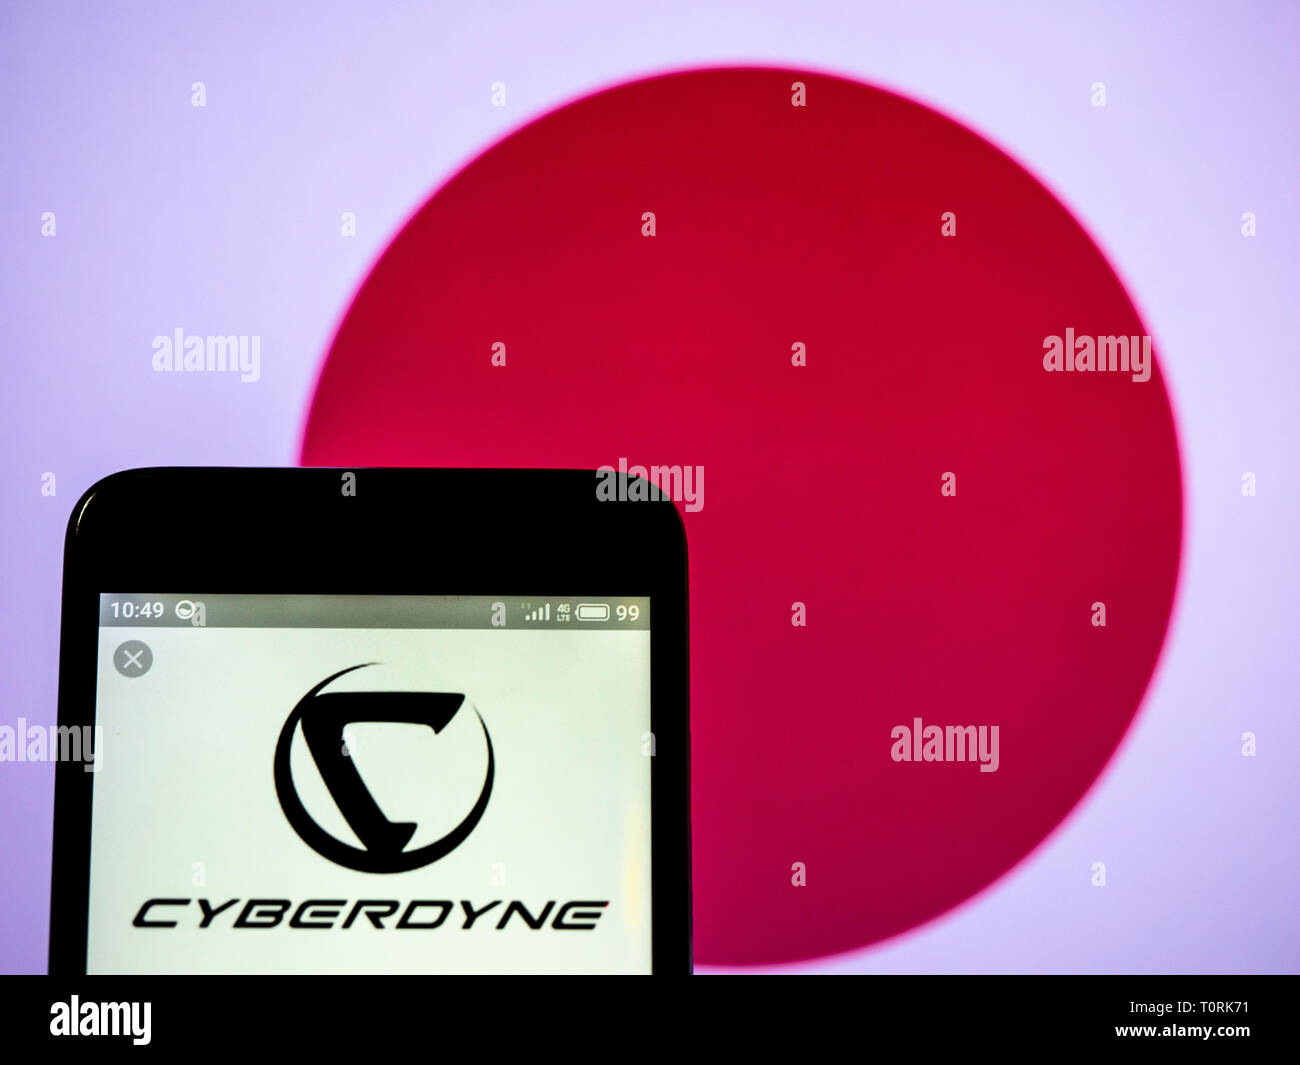 Cyberdyne Inc. logo seen displayed on smart phone. Stock Photo